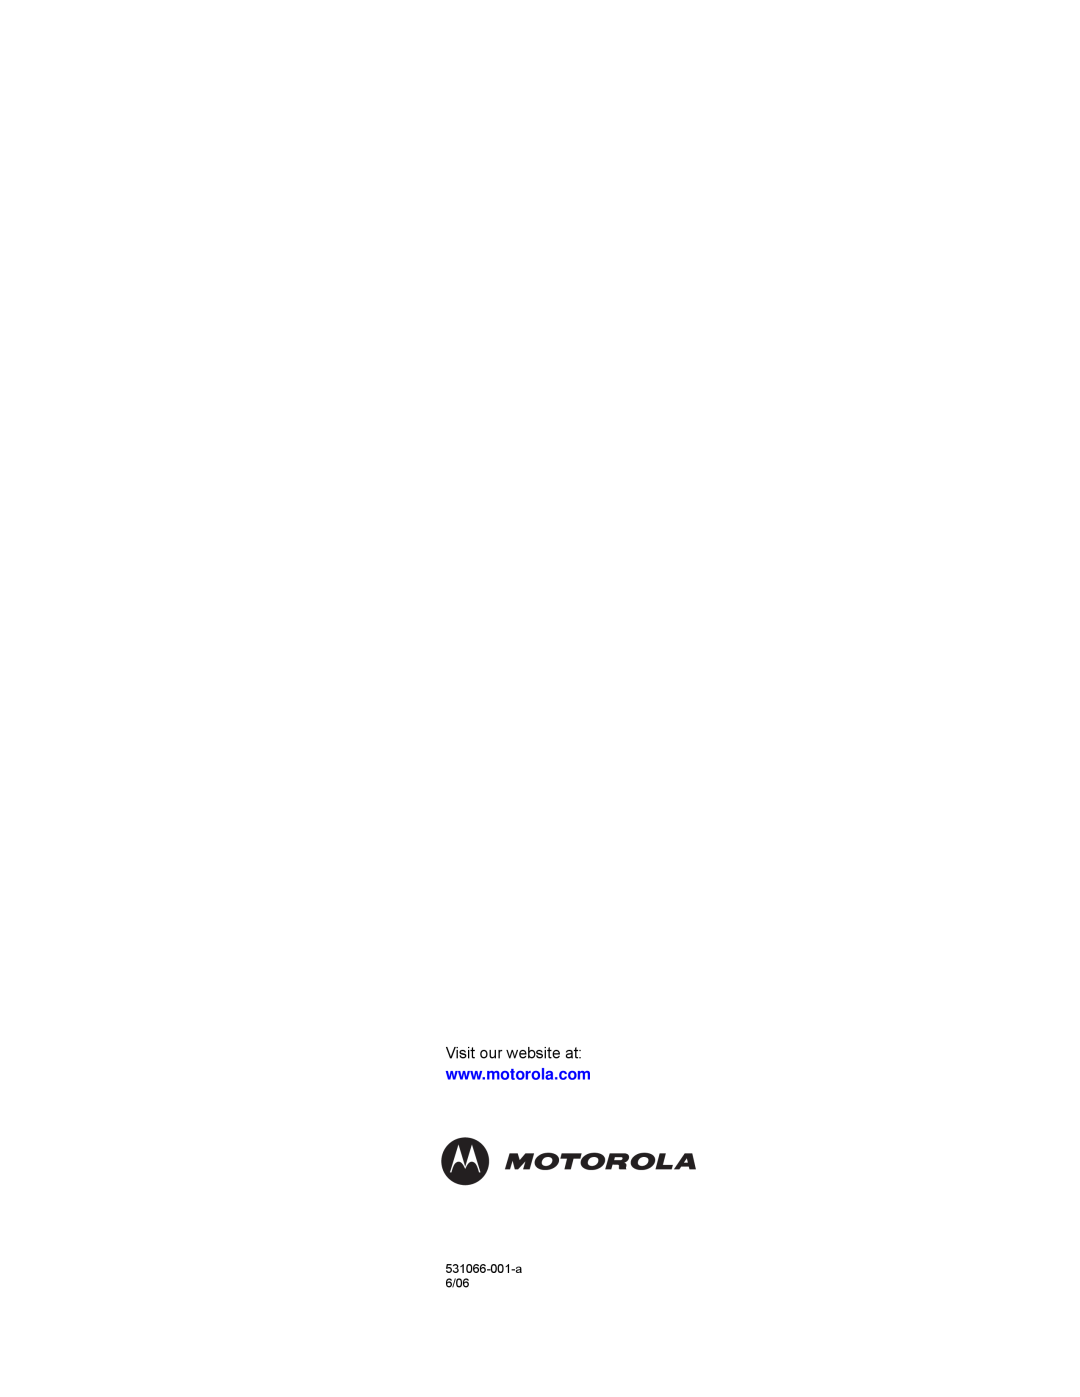 Motorola VT2142 manual Visit our website at, 531066-001-a 6/06 